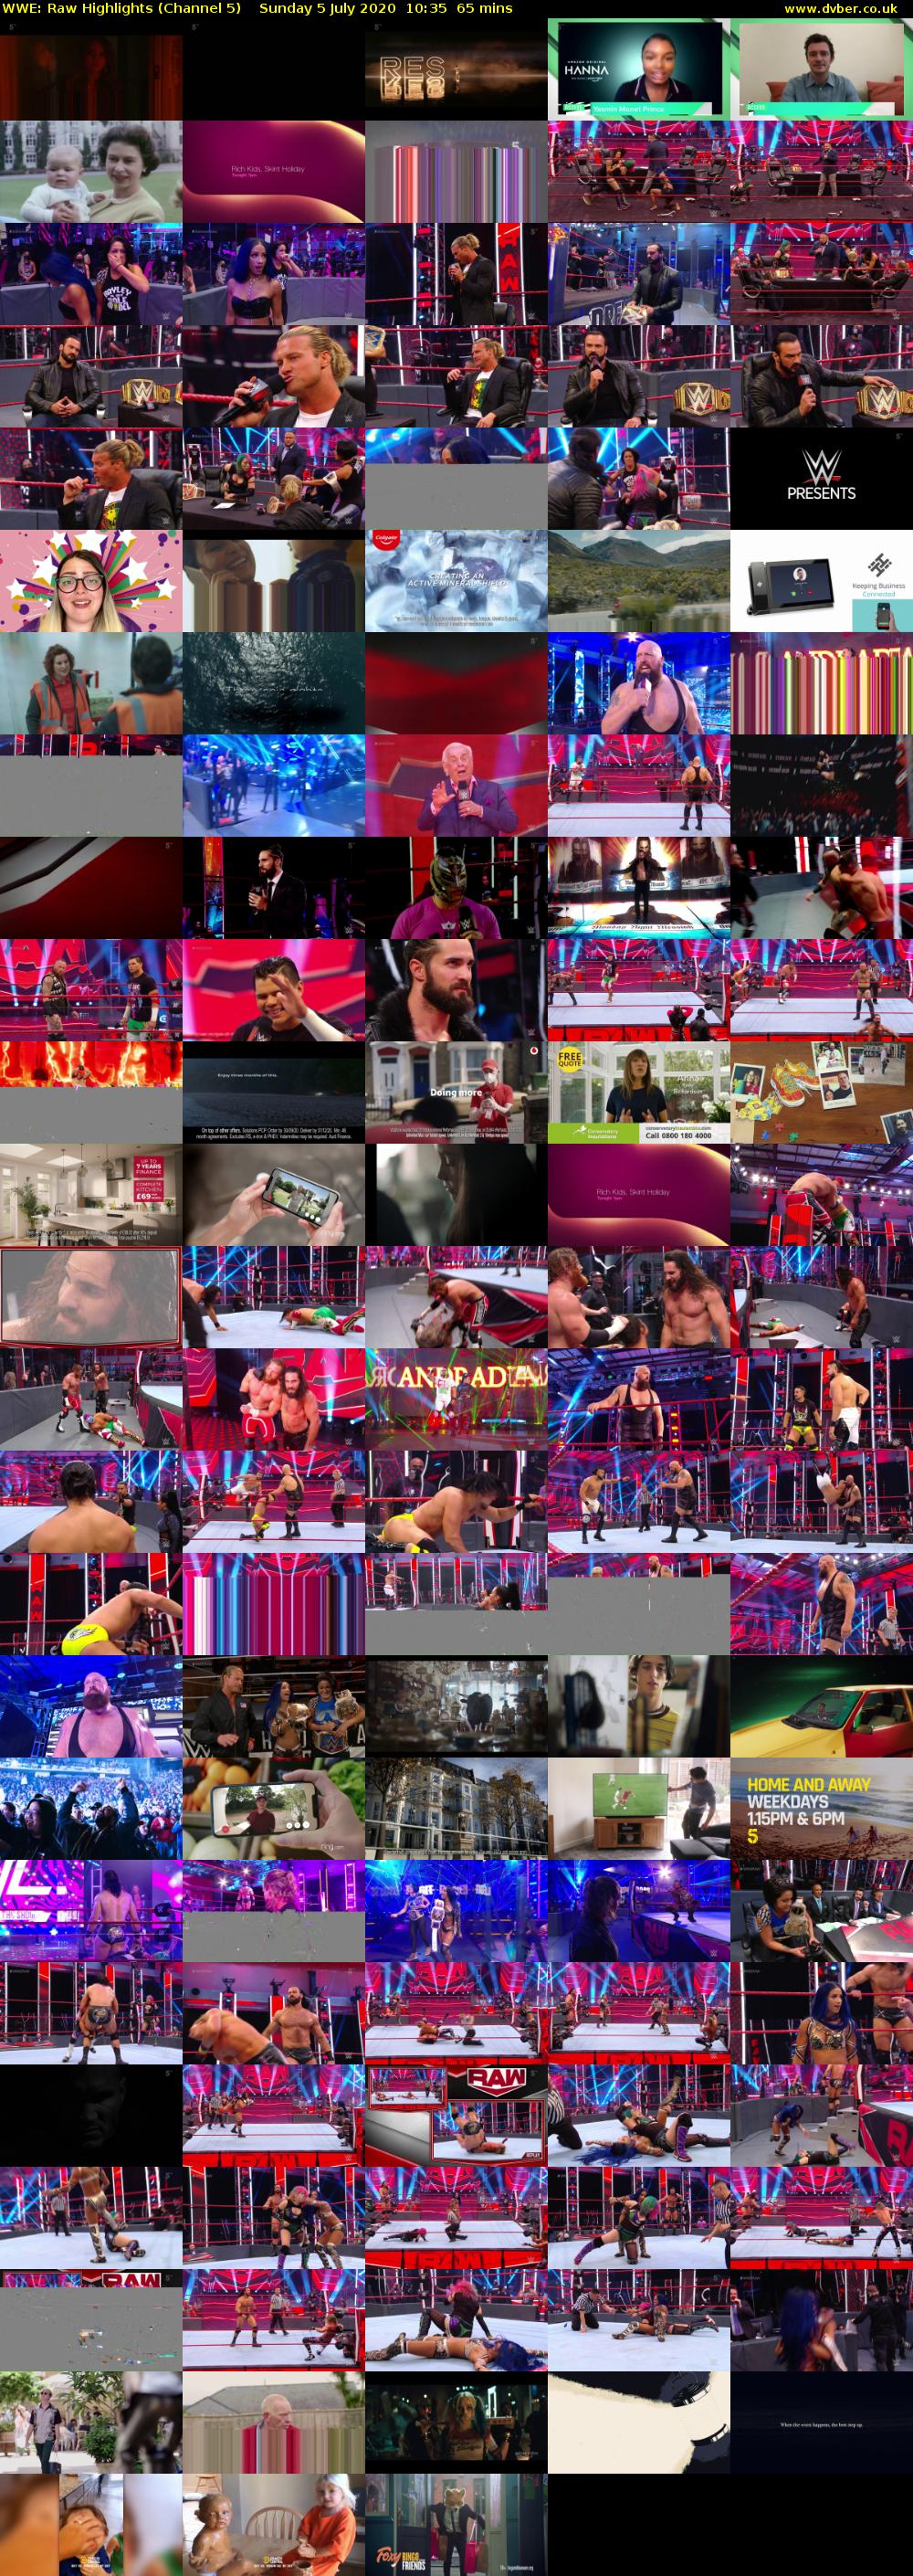 WWE: Raw Highlights (Channel 5) Sunday 5 July 2020 10:35 - 11:40